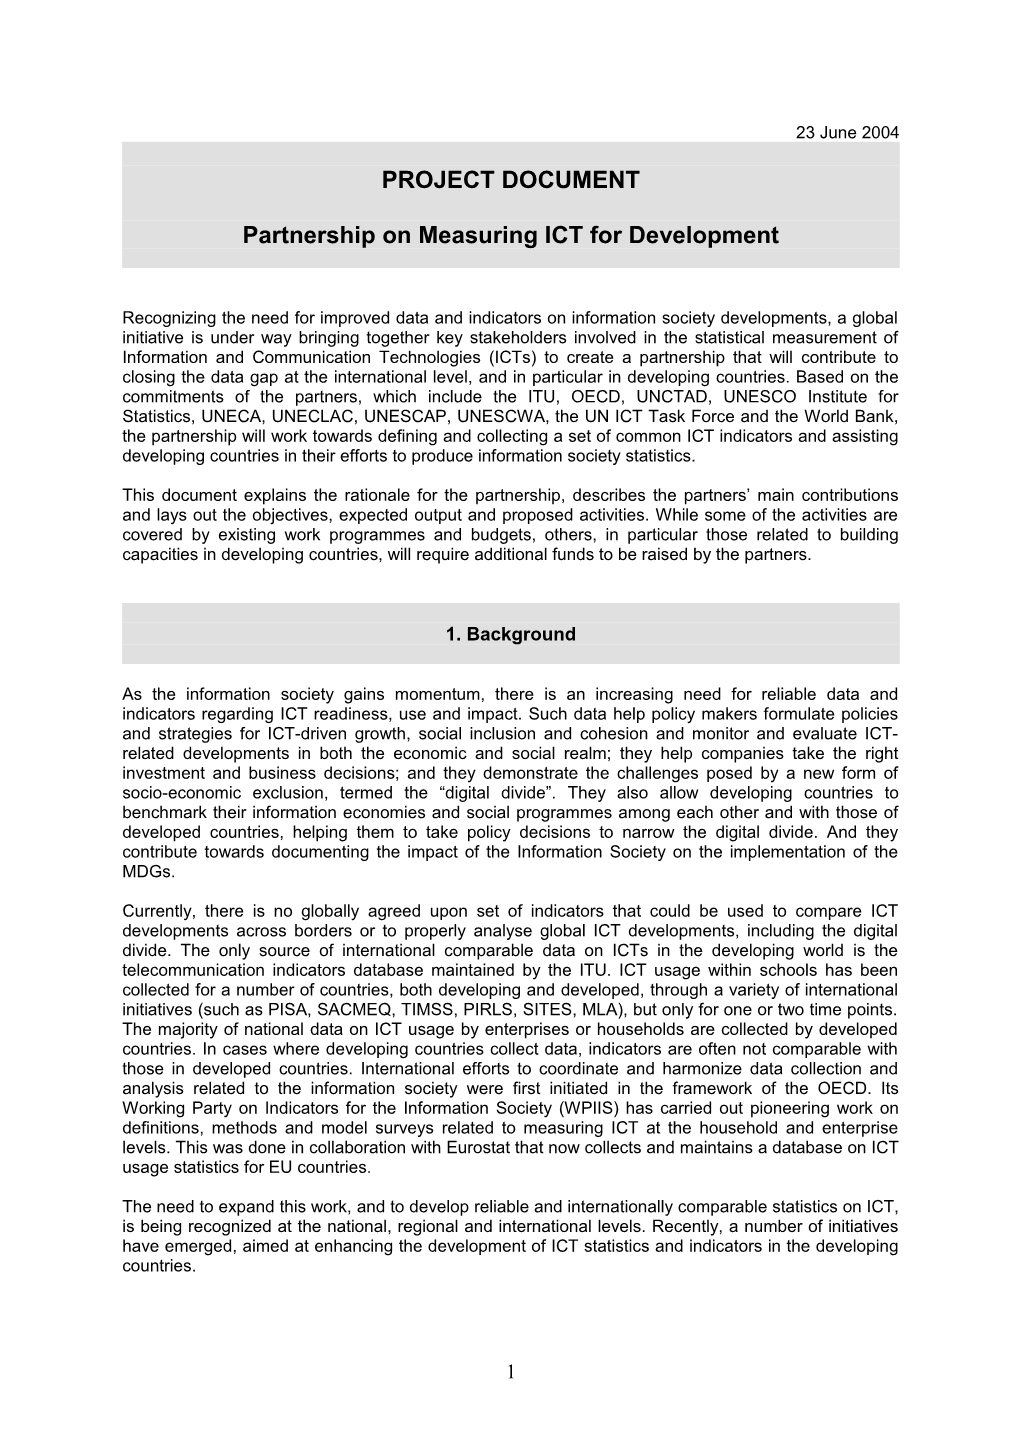 Partnership on Measuring ICT for Development